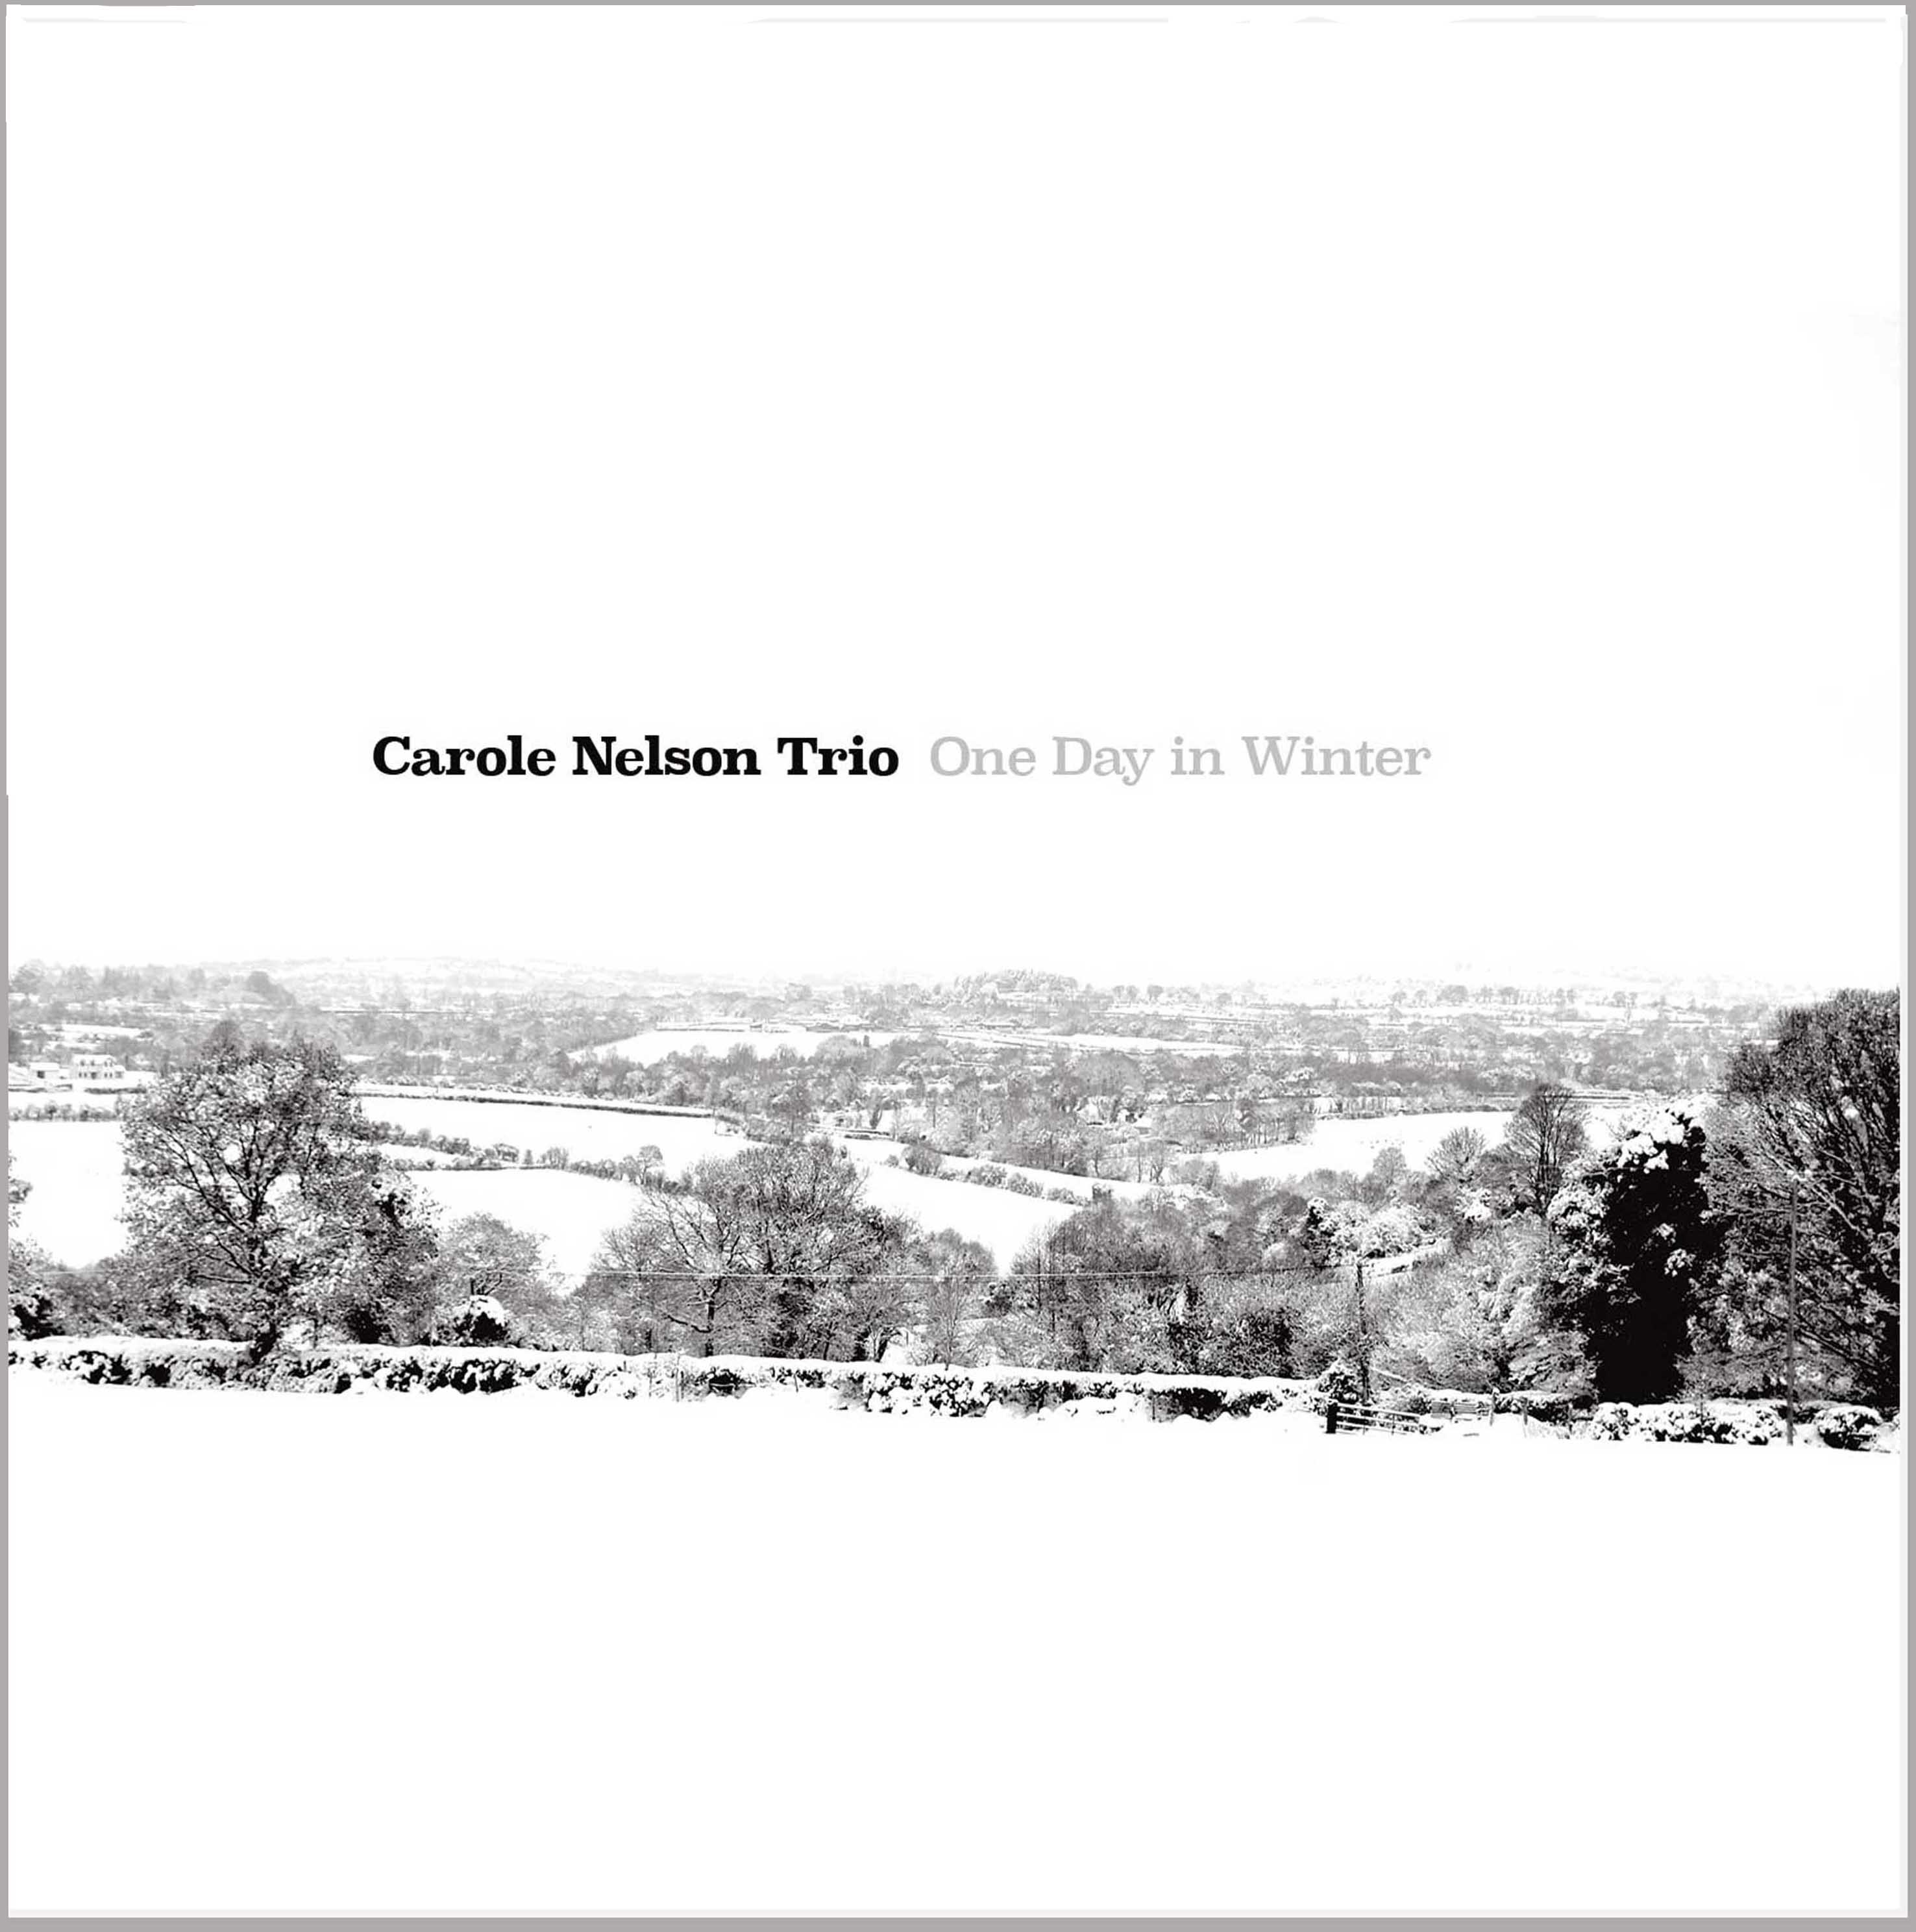 Carole Nelson Trio - One Day in Winter - Album Review